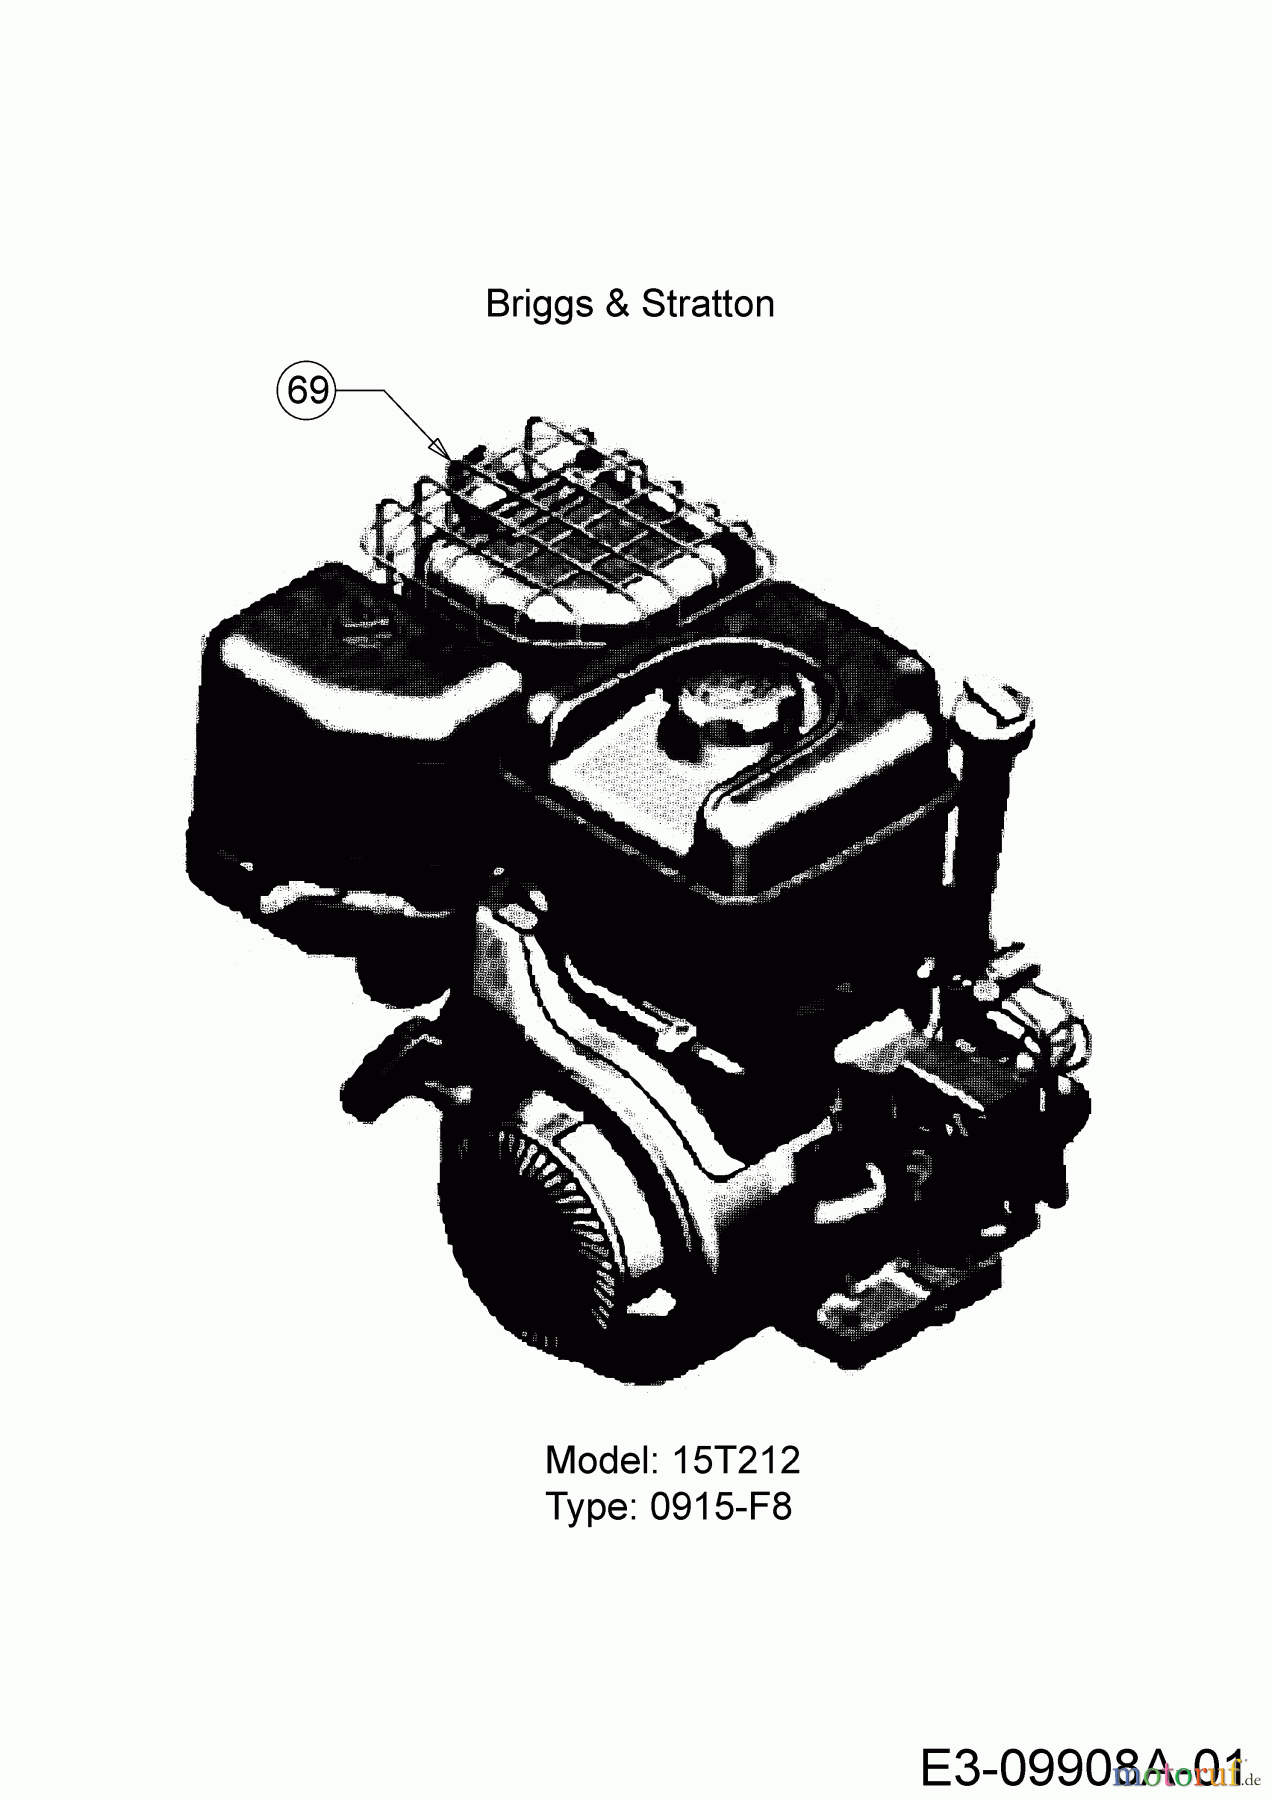  Troy-Bilt Chipper CS 4325 24B-424M766  (2018) Engine Briggs & Stratton